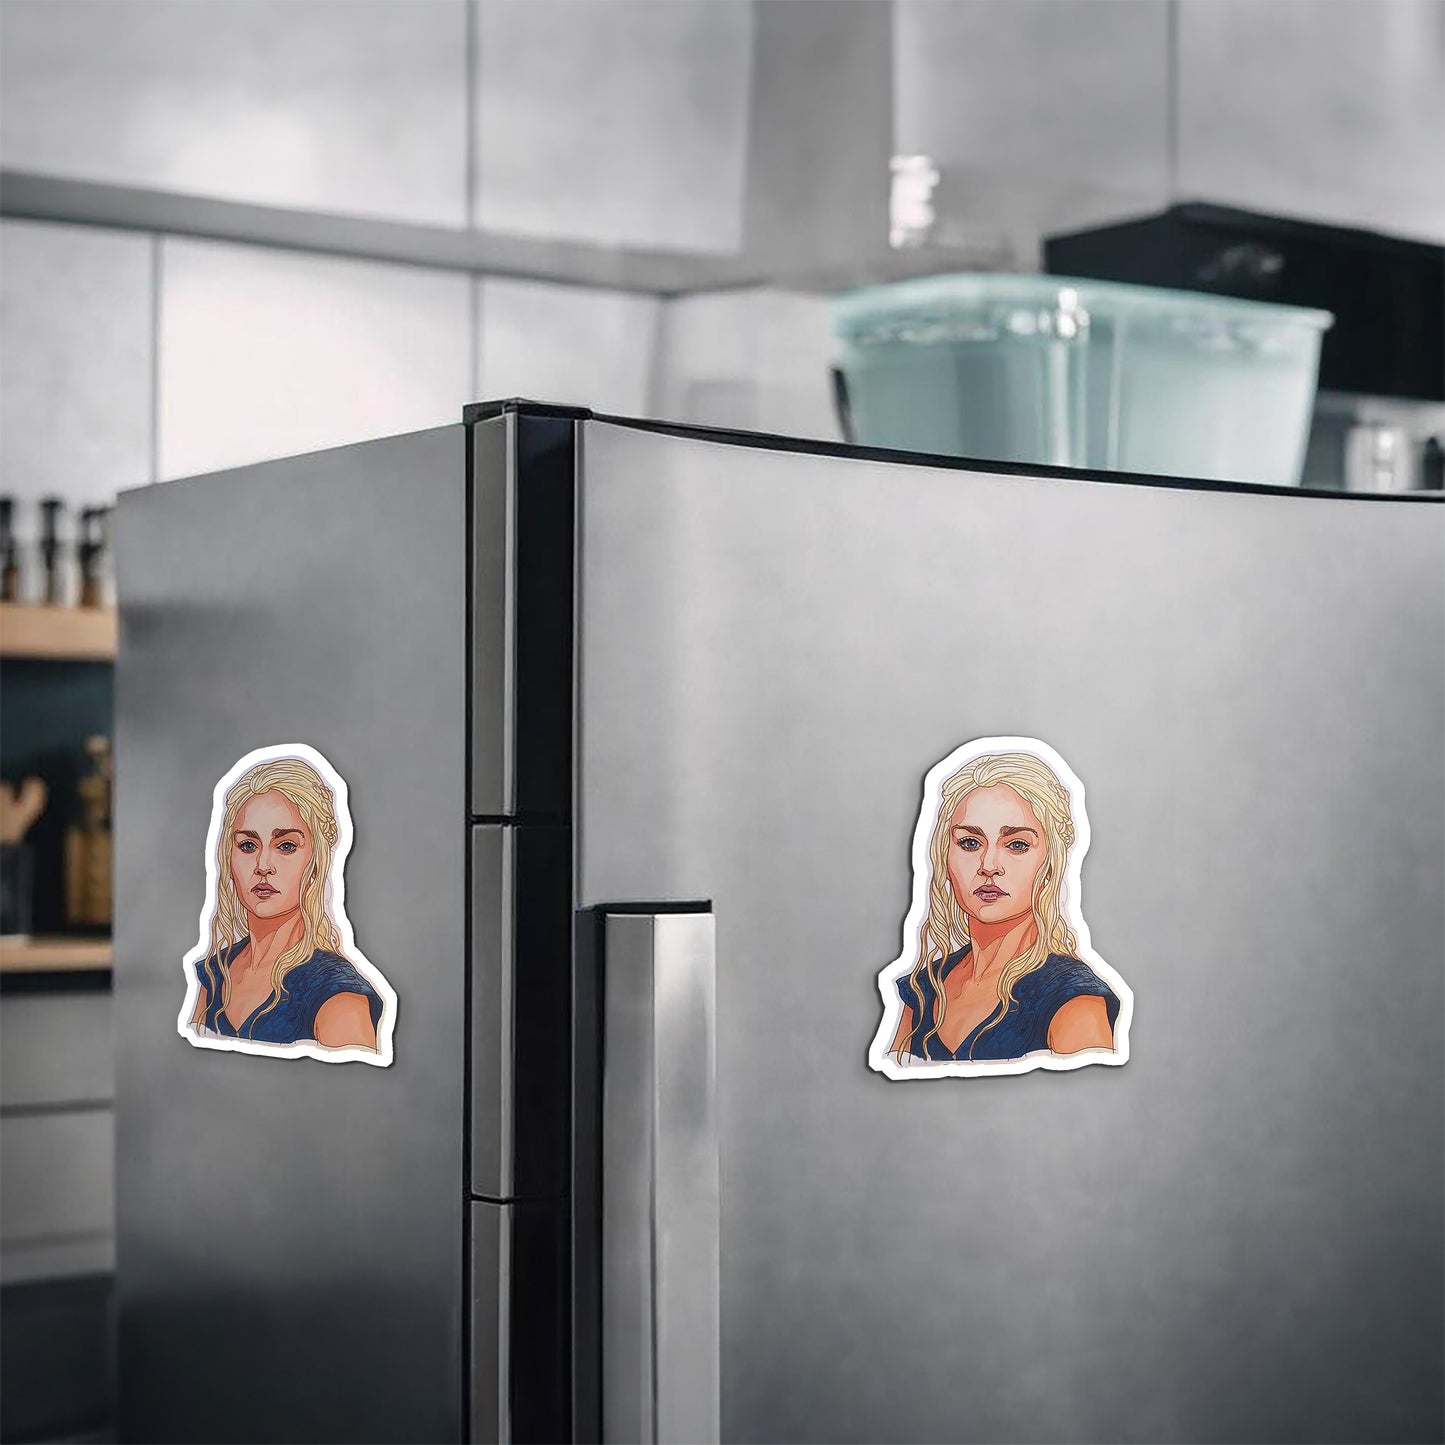 Khaleesi Daenerys Magnetic Sticker